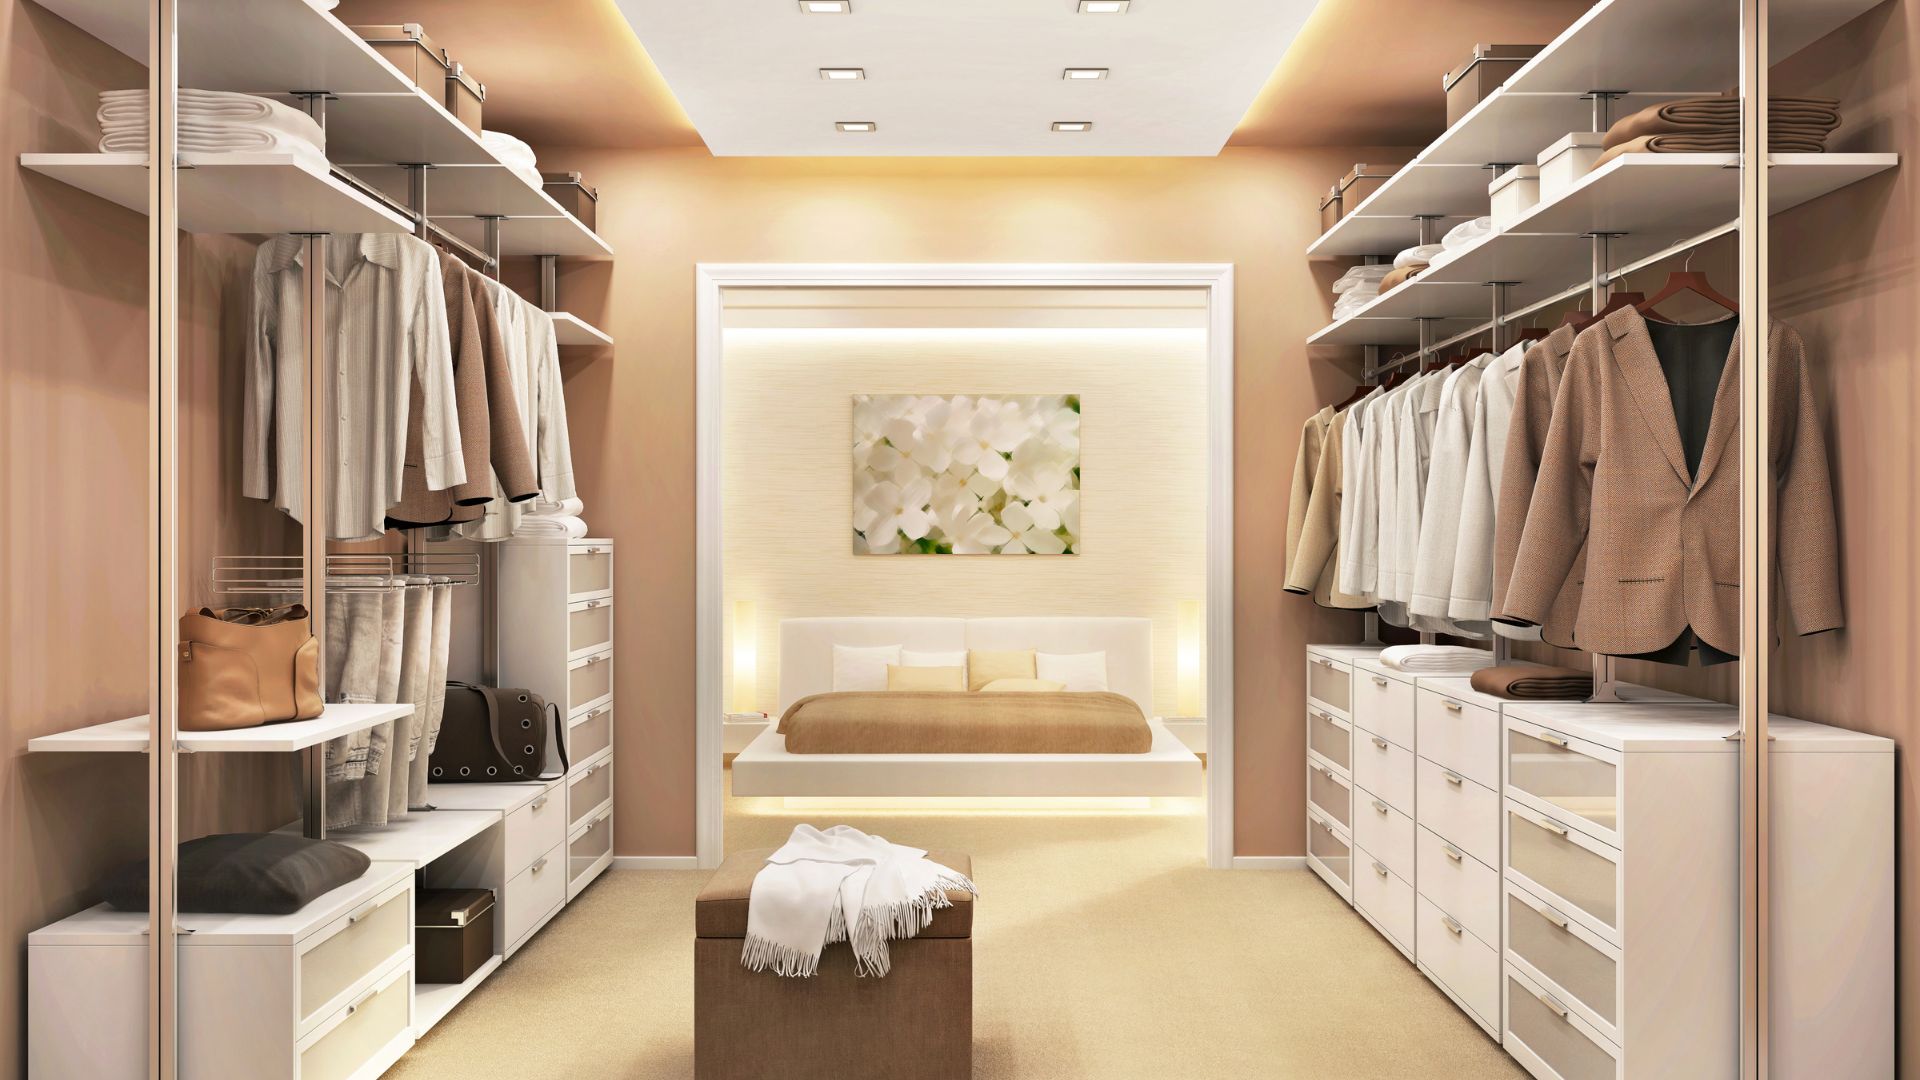 Luxury bedroom with spacious open closet